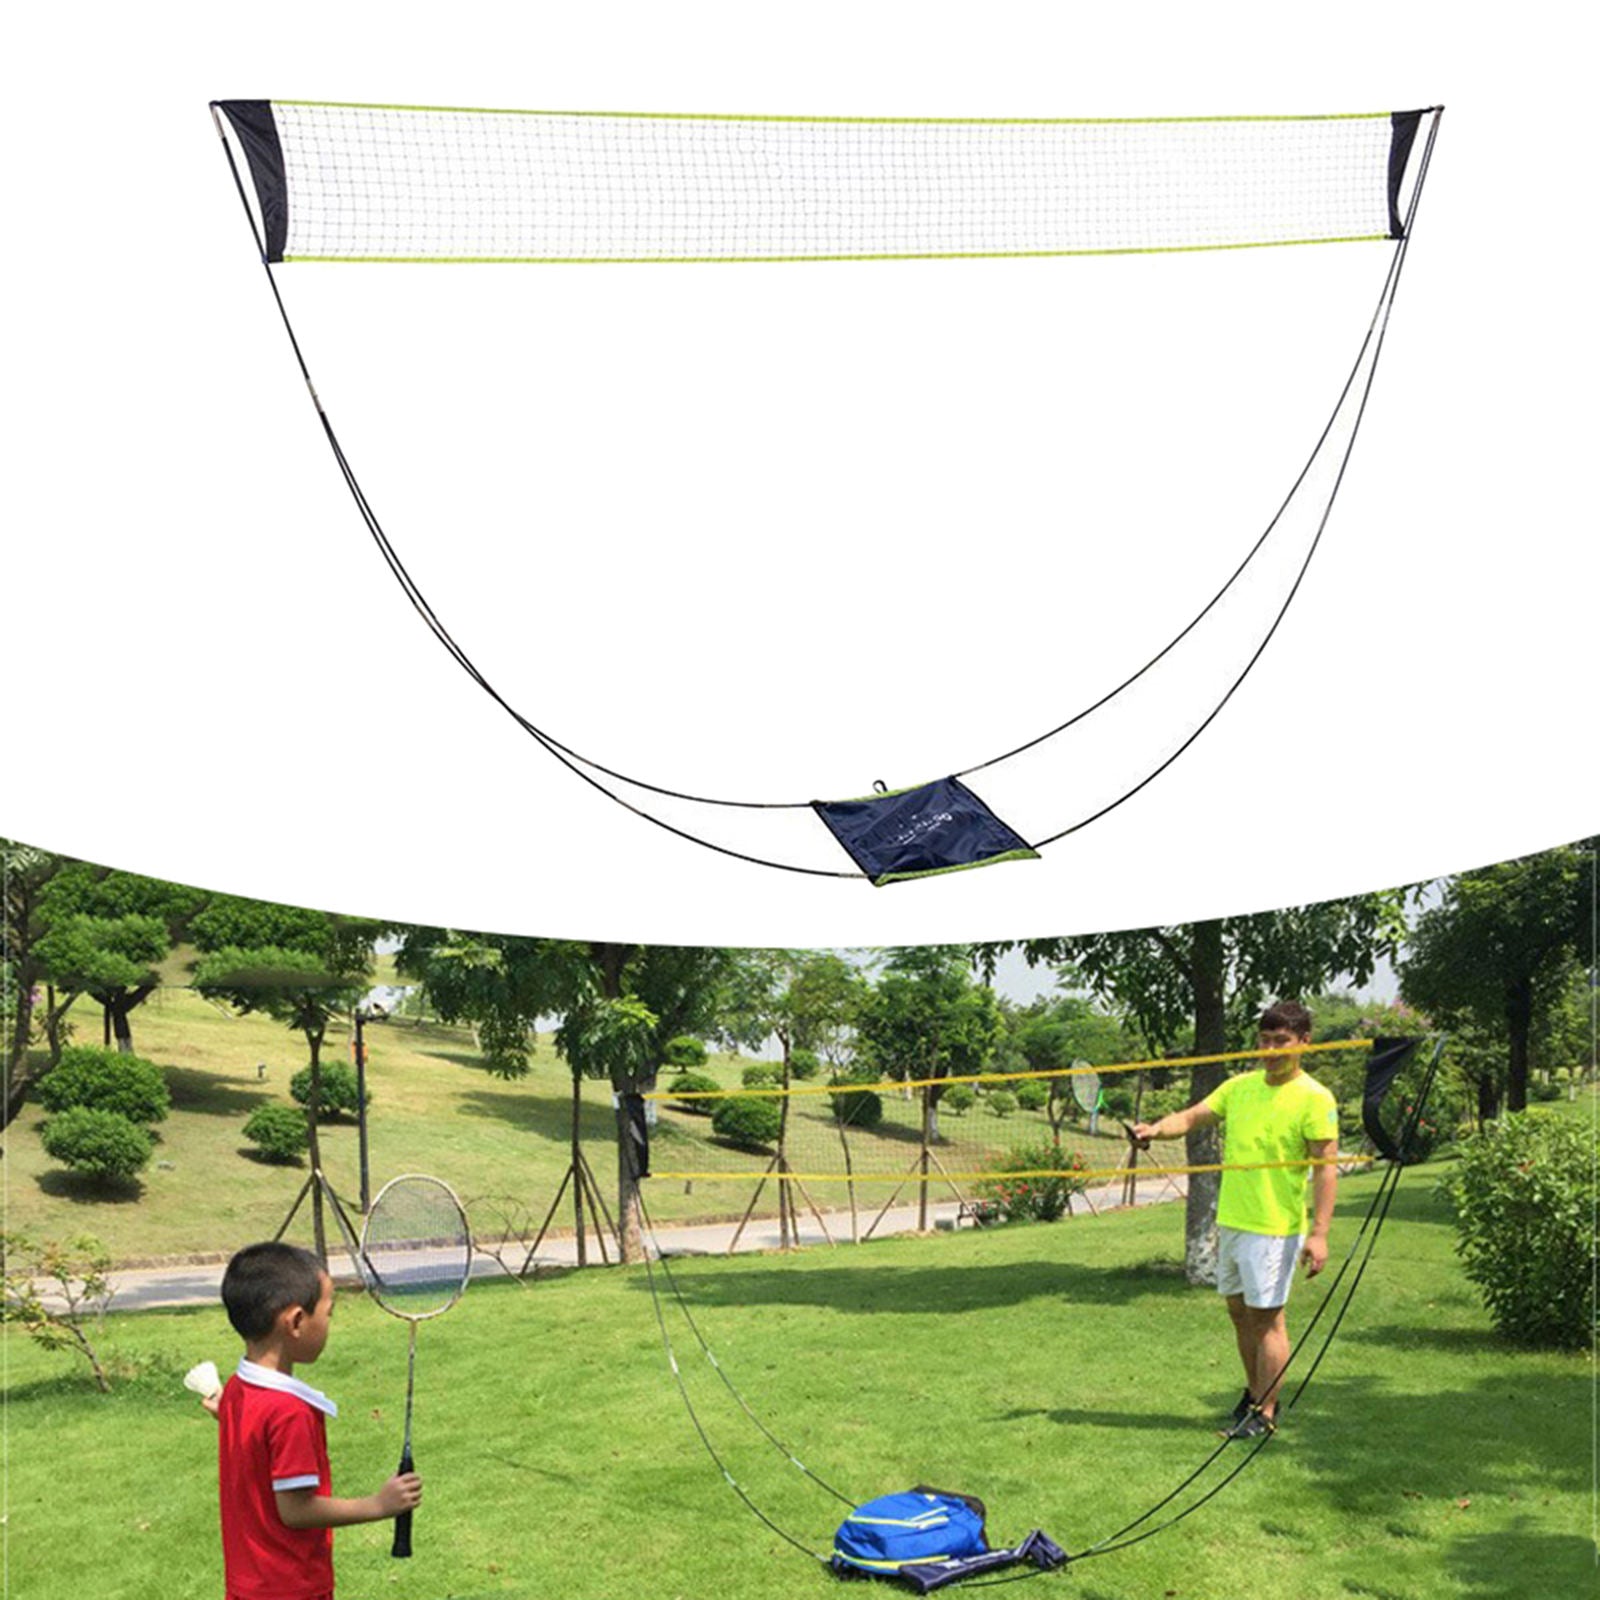 Foldable Portable Badminton Net Easy Assemble for Tennis Yard Backyard